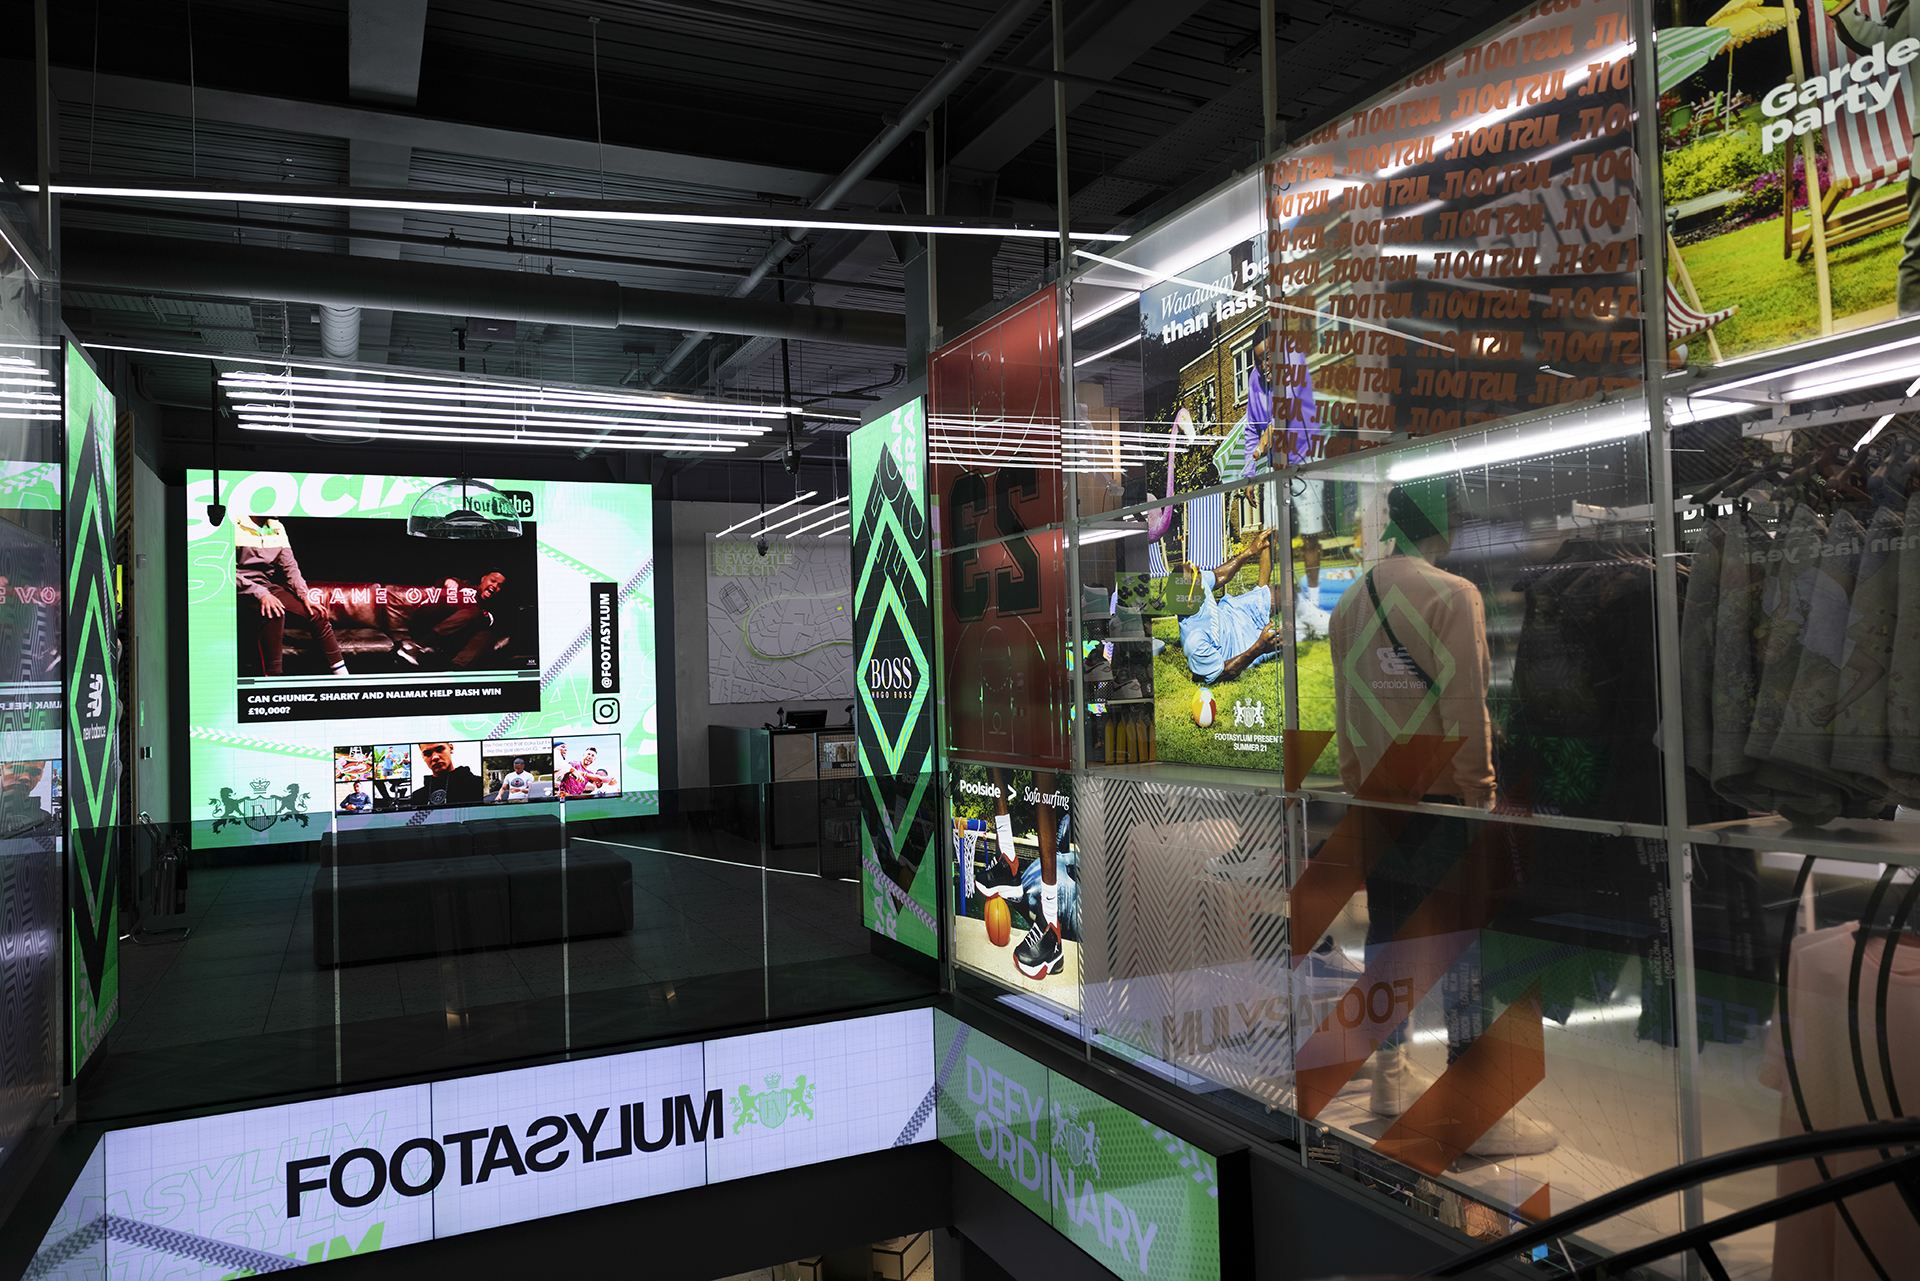 Footasylum invest with major digital signage upgrade